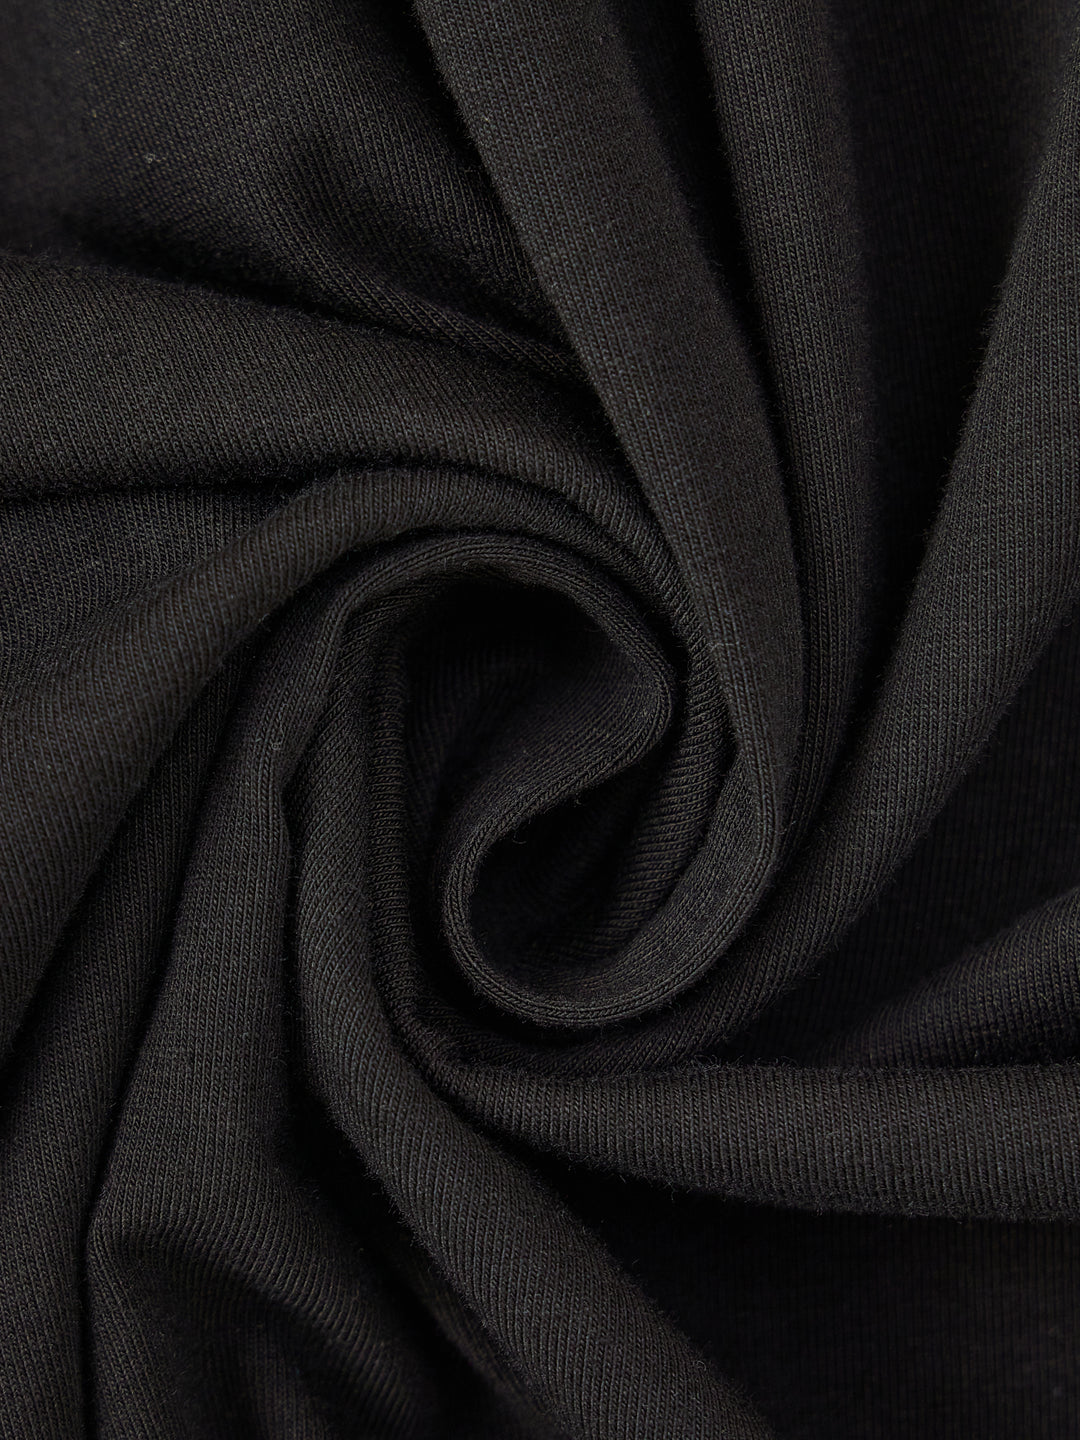 Checked Collar Dress - Black